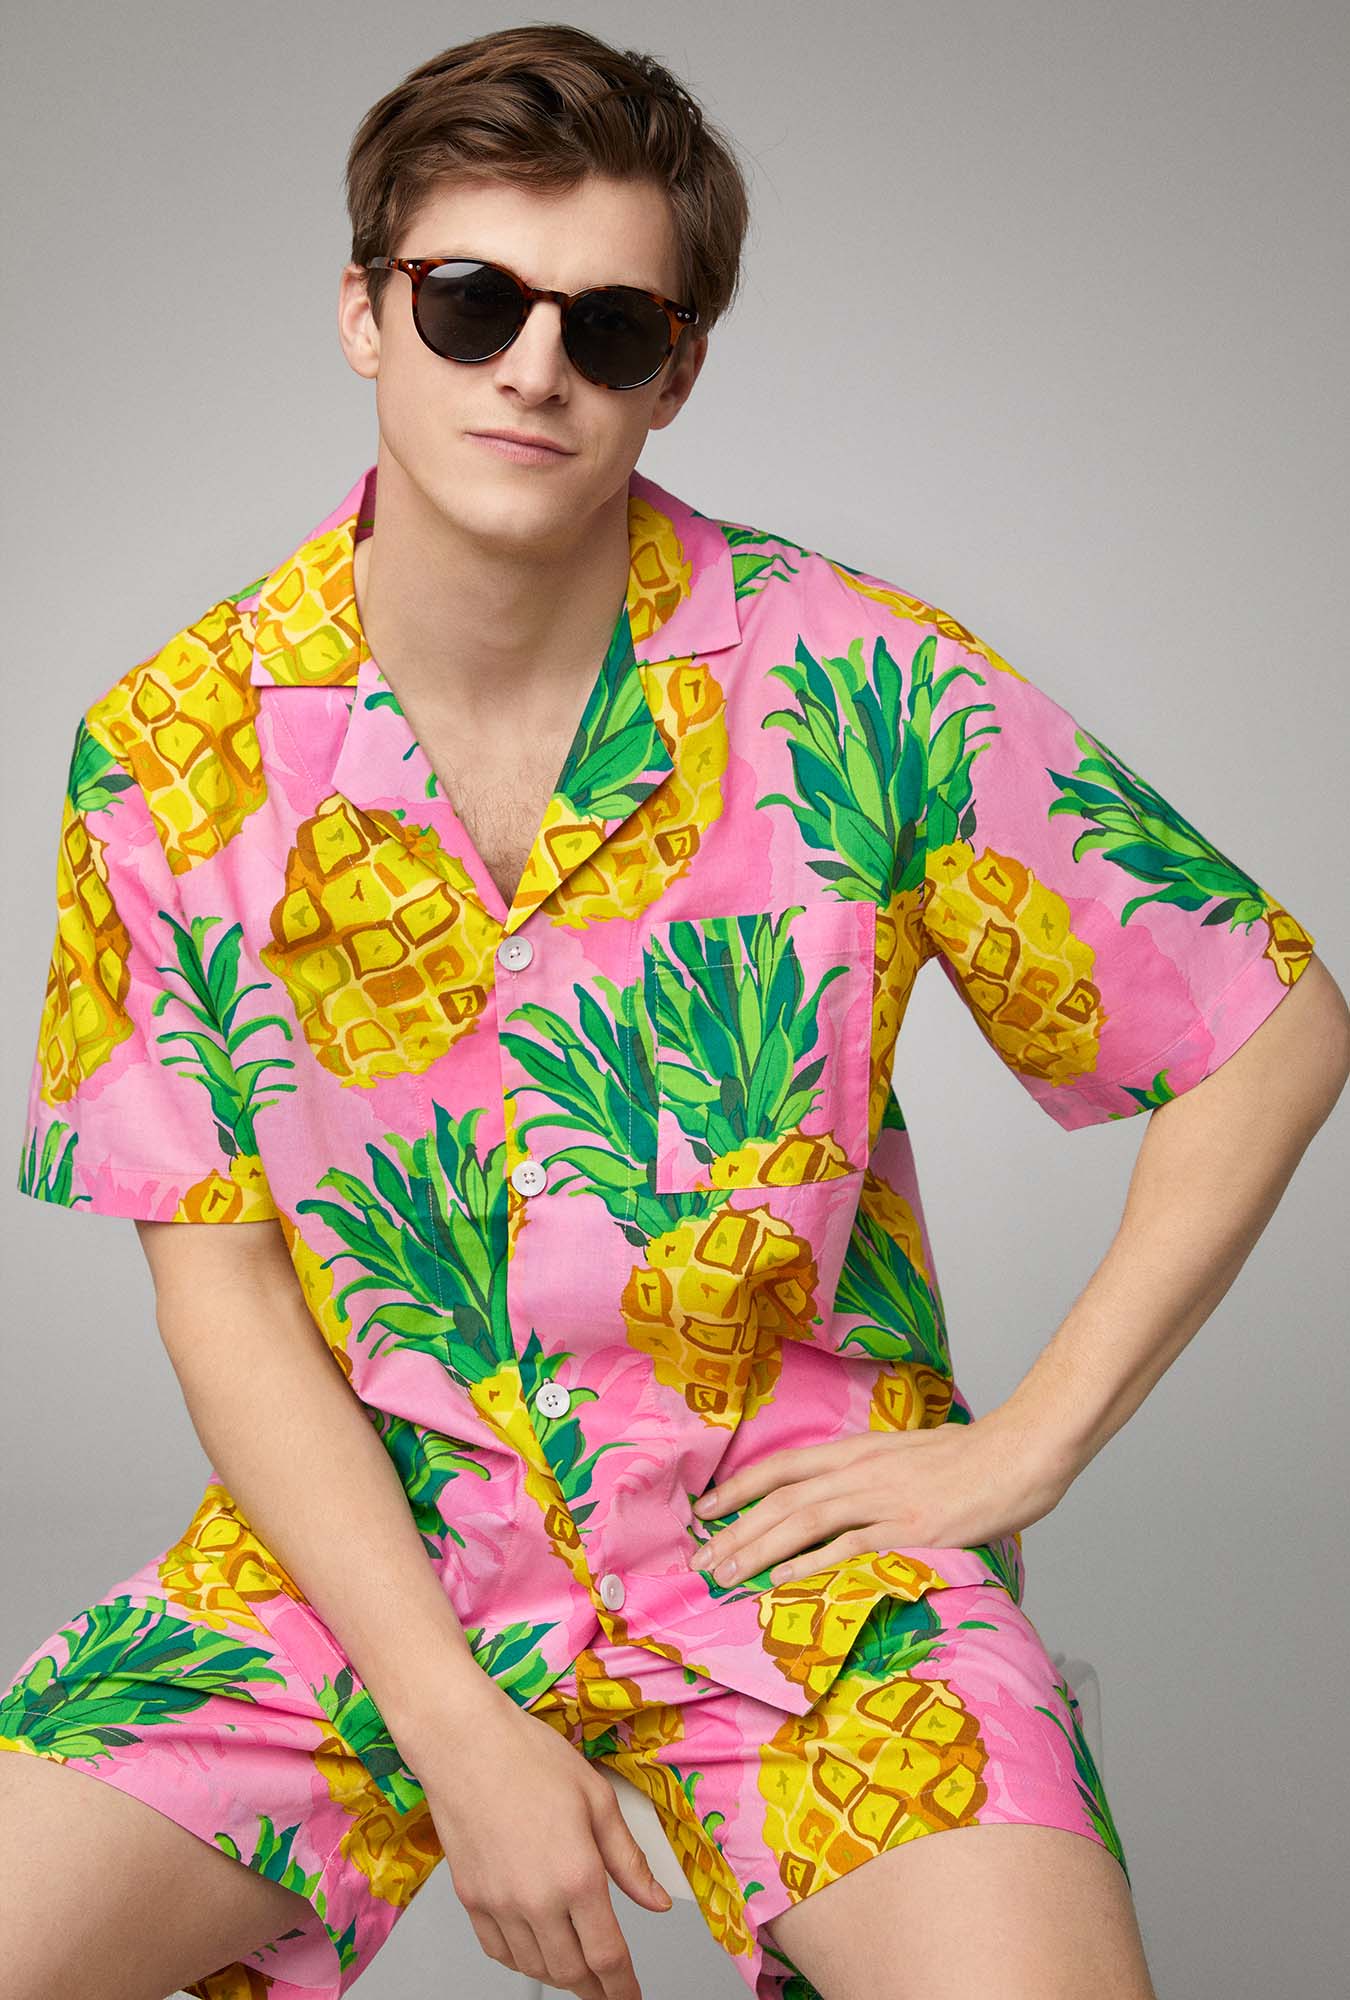 A men wearing Short Sleeve Woven Poplin Boxer PJ Set with  Pineapple print